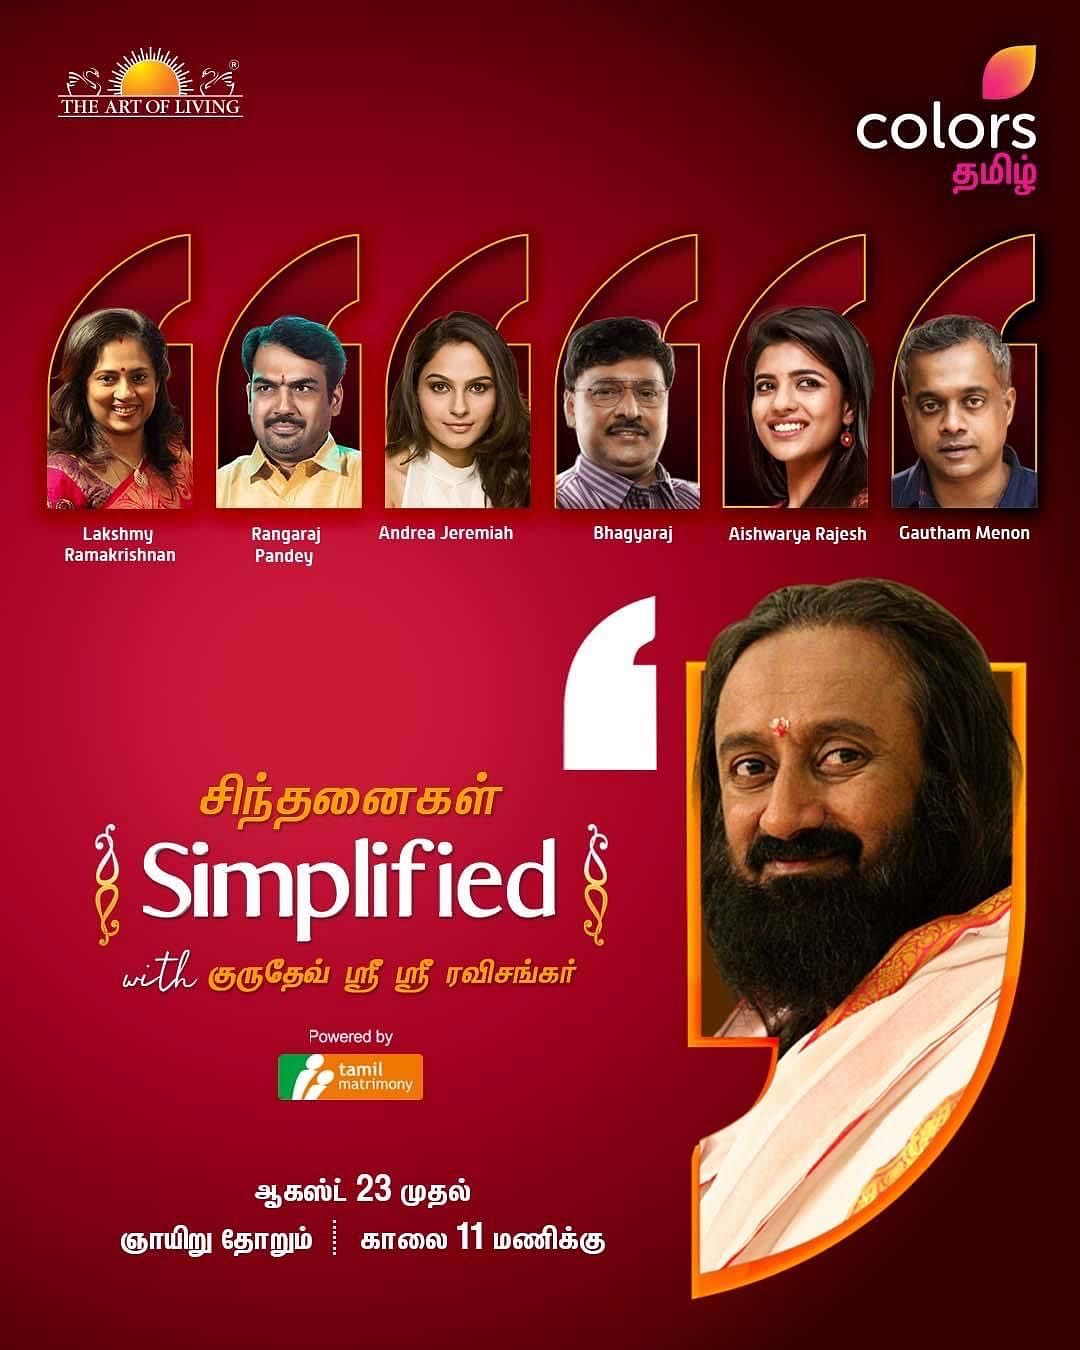 COLORS Tamil brings
‘Sinthanaigal Simplified’ featuring Gurudev Sri Sri Ravishankar